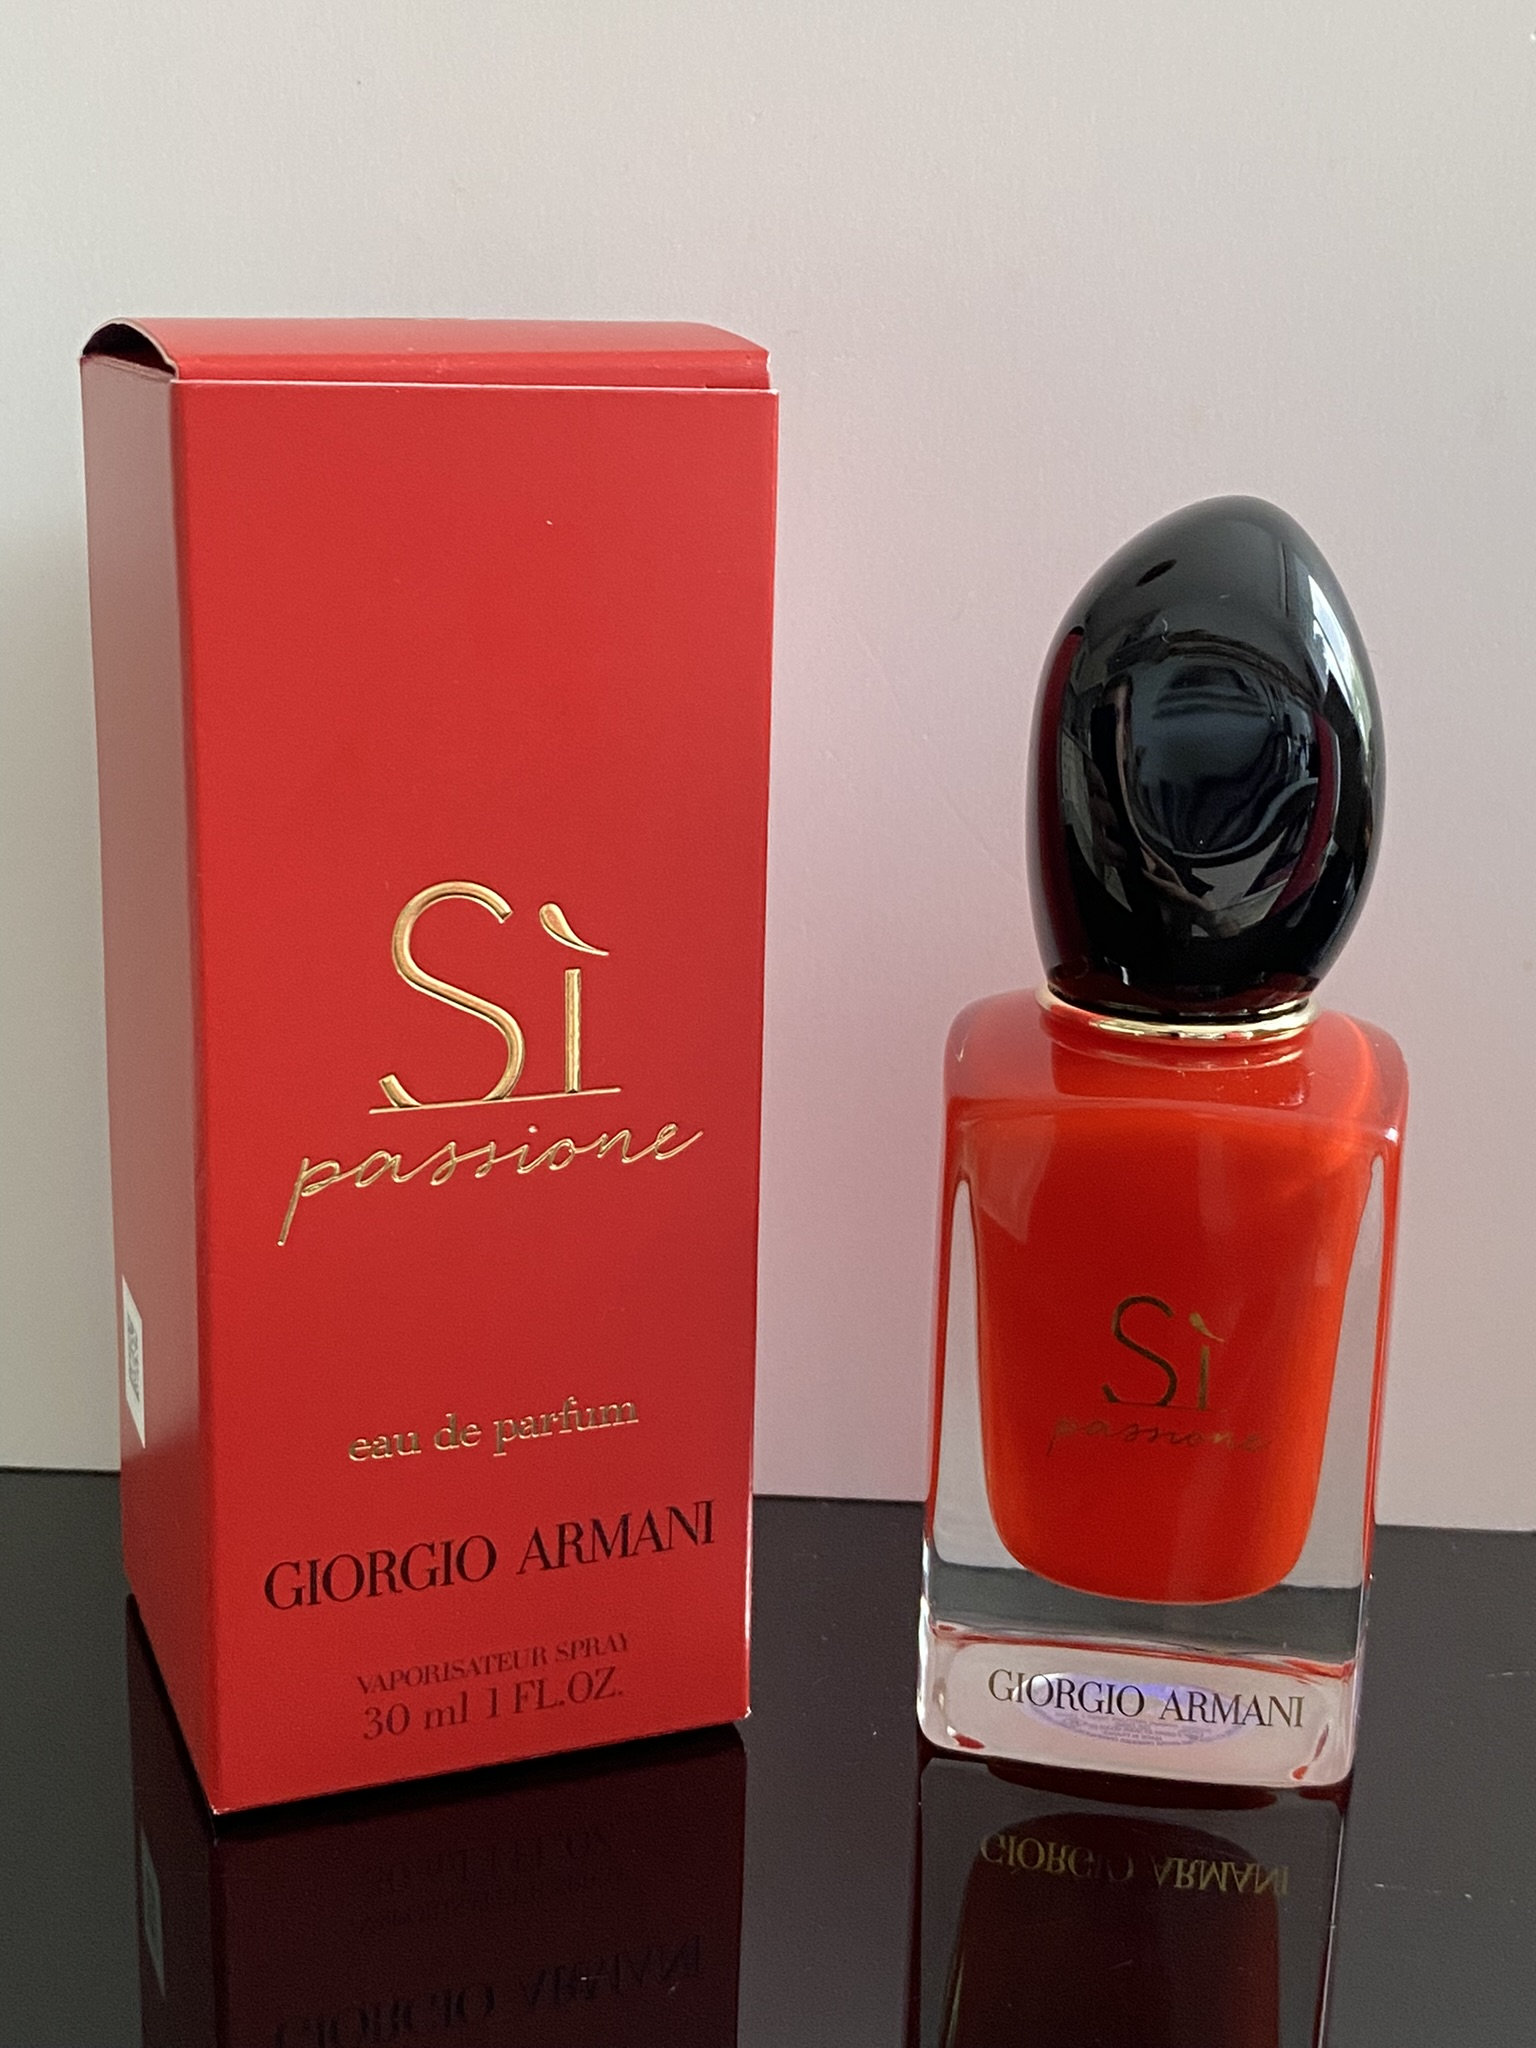 Giorgio Armani Si Passione Eau De Parfum 30 Ml Jahr 2001 von miniperfumes